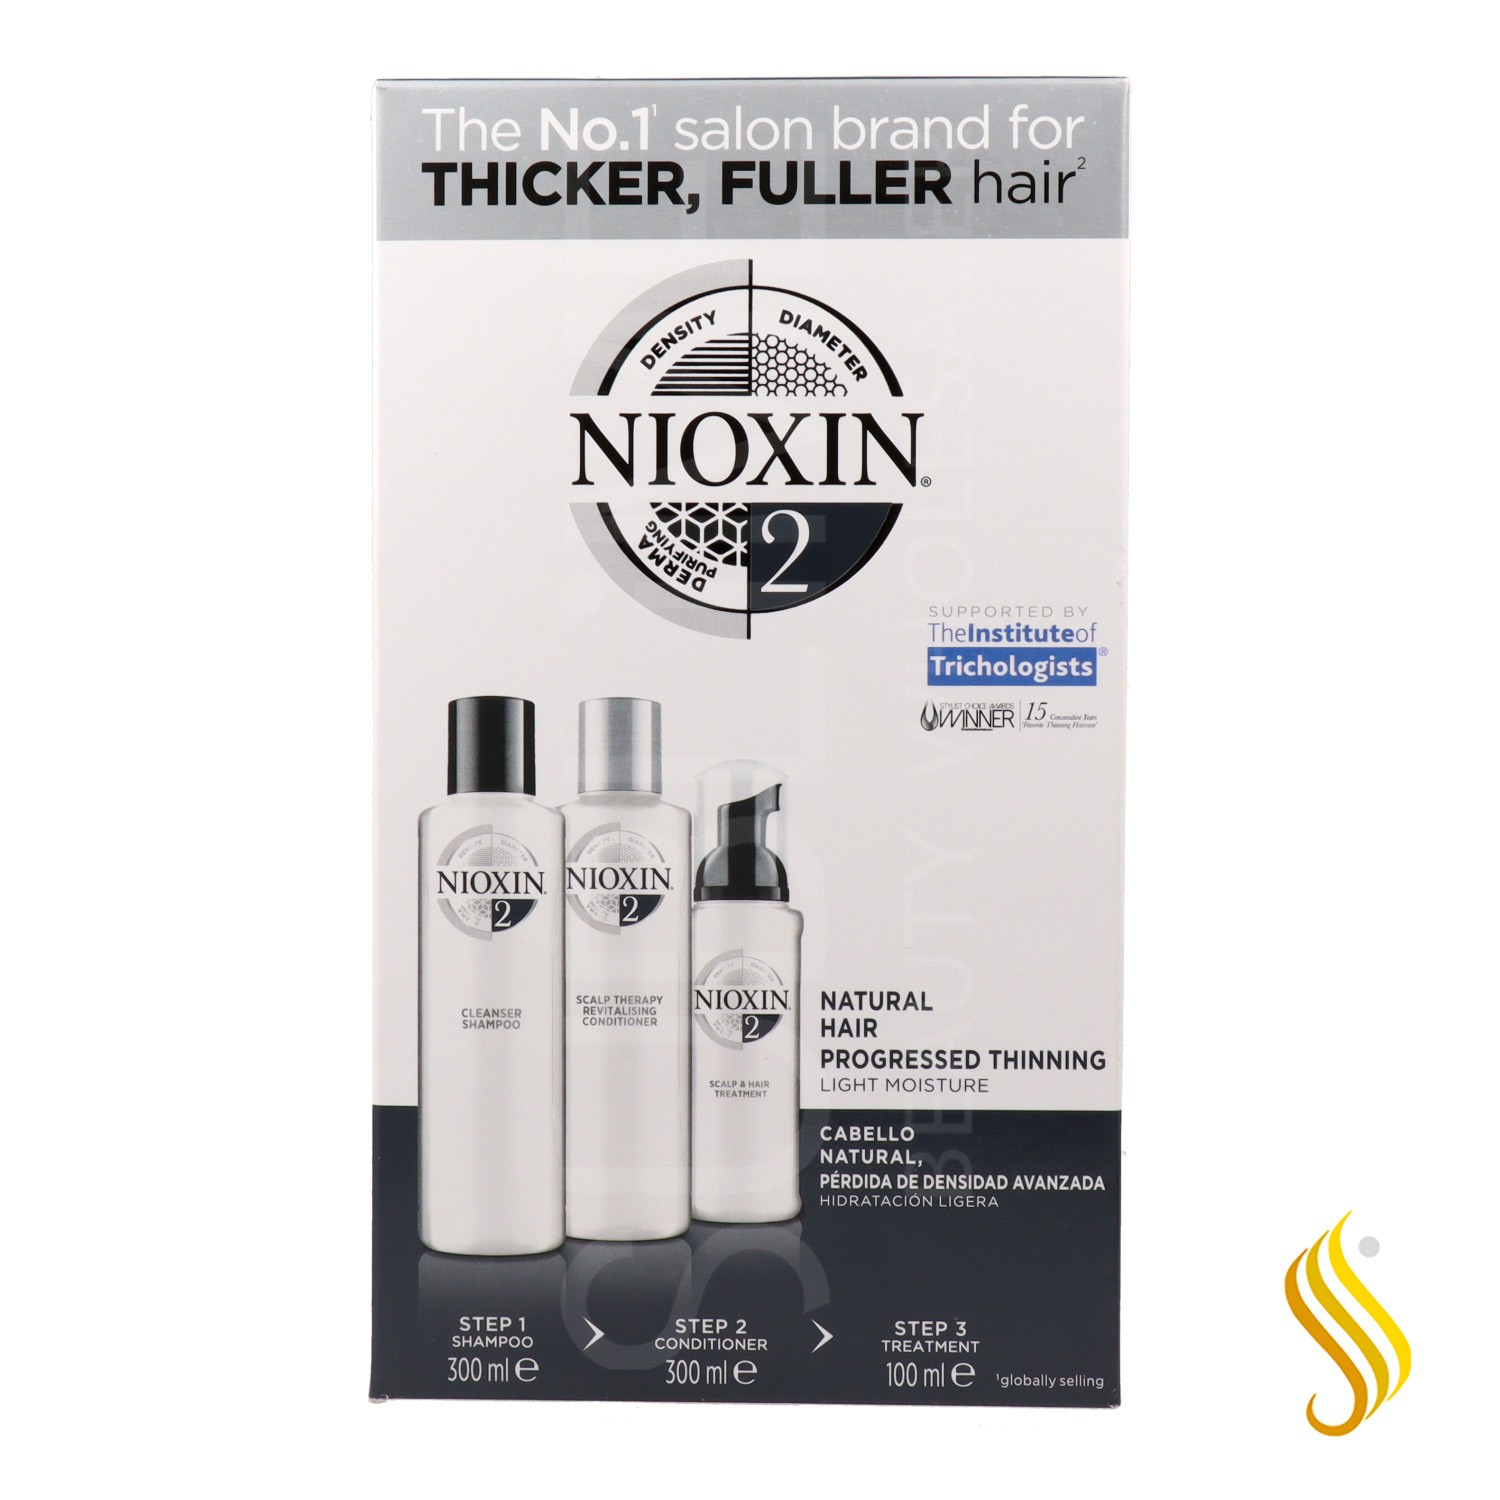 Nioxin Trial Kit Sist 2 Light Moisturizer for Natural Hair